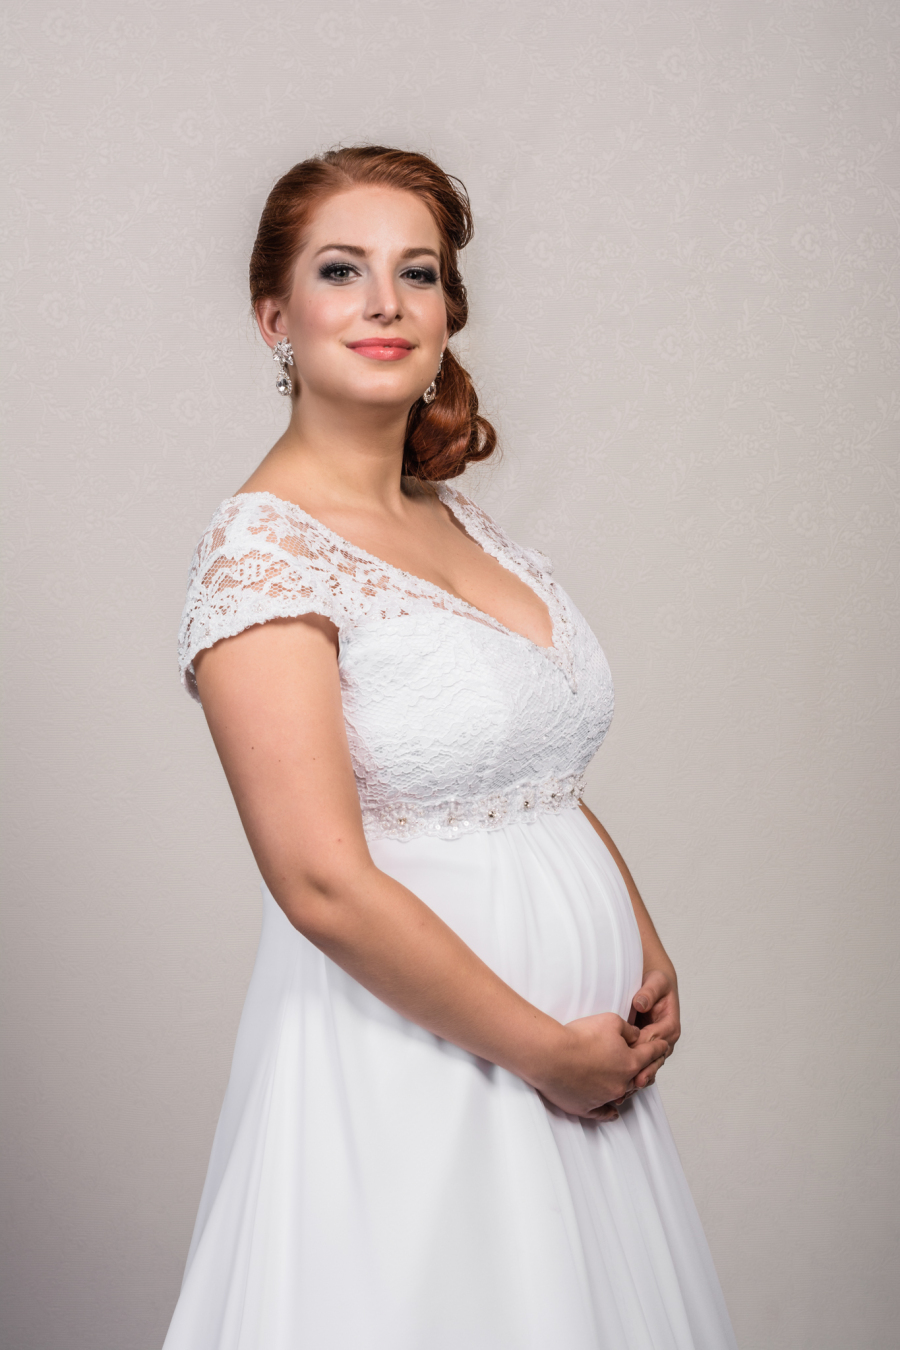 maternity wedding dress 1506